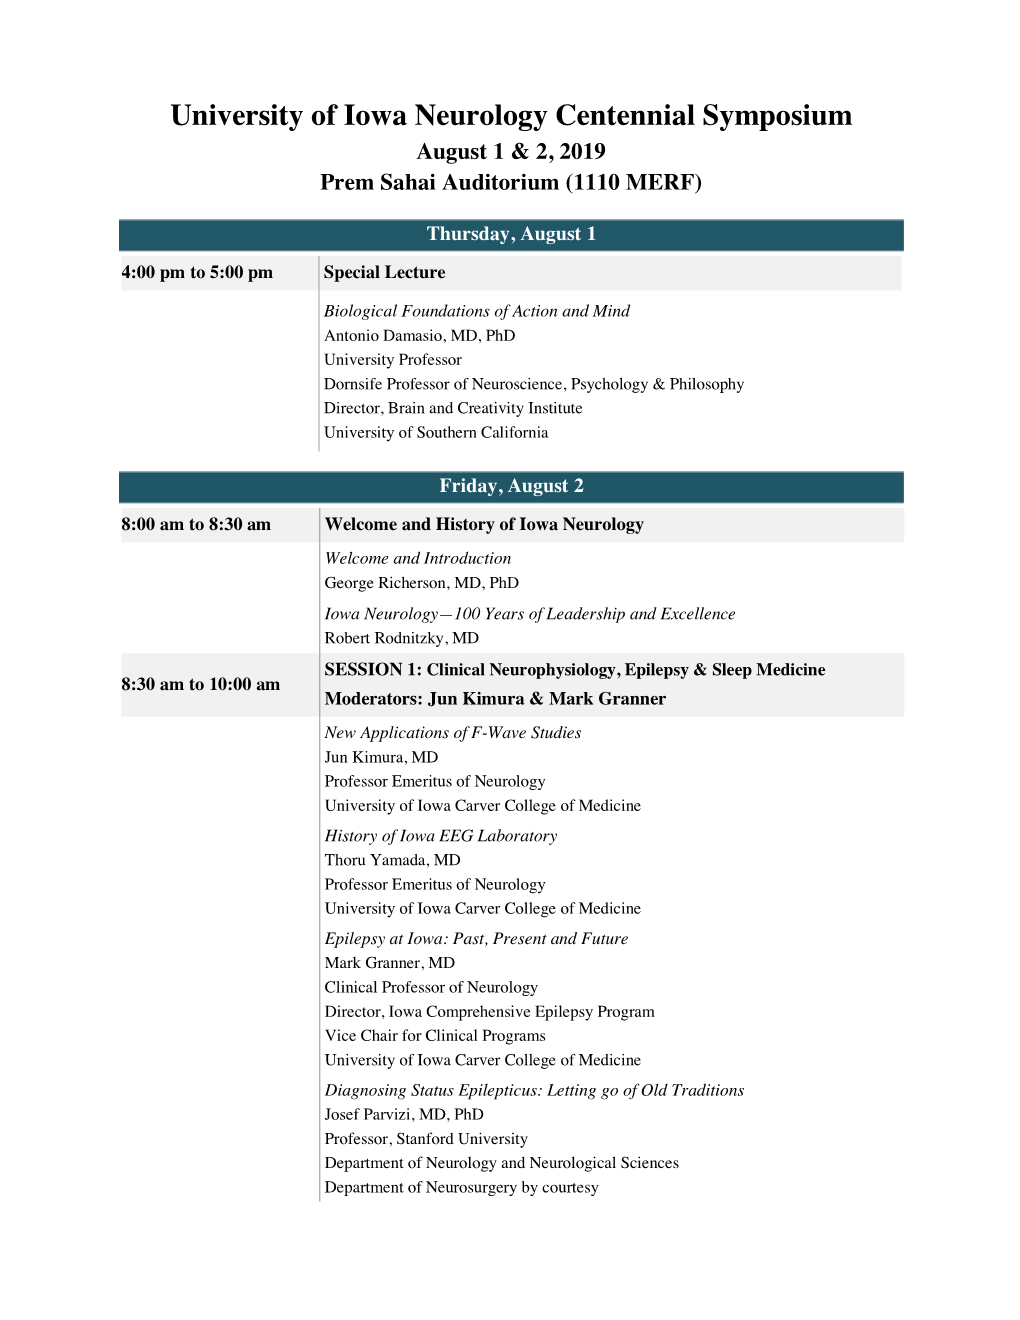 University of Iowa Neurology Centennial Symposium August 1 & 2, 2019 Prem Sahai Auditorium (1110 MERF)